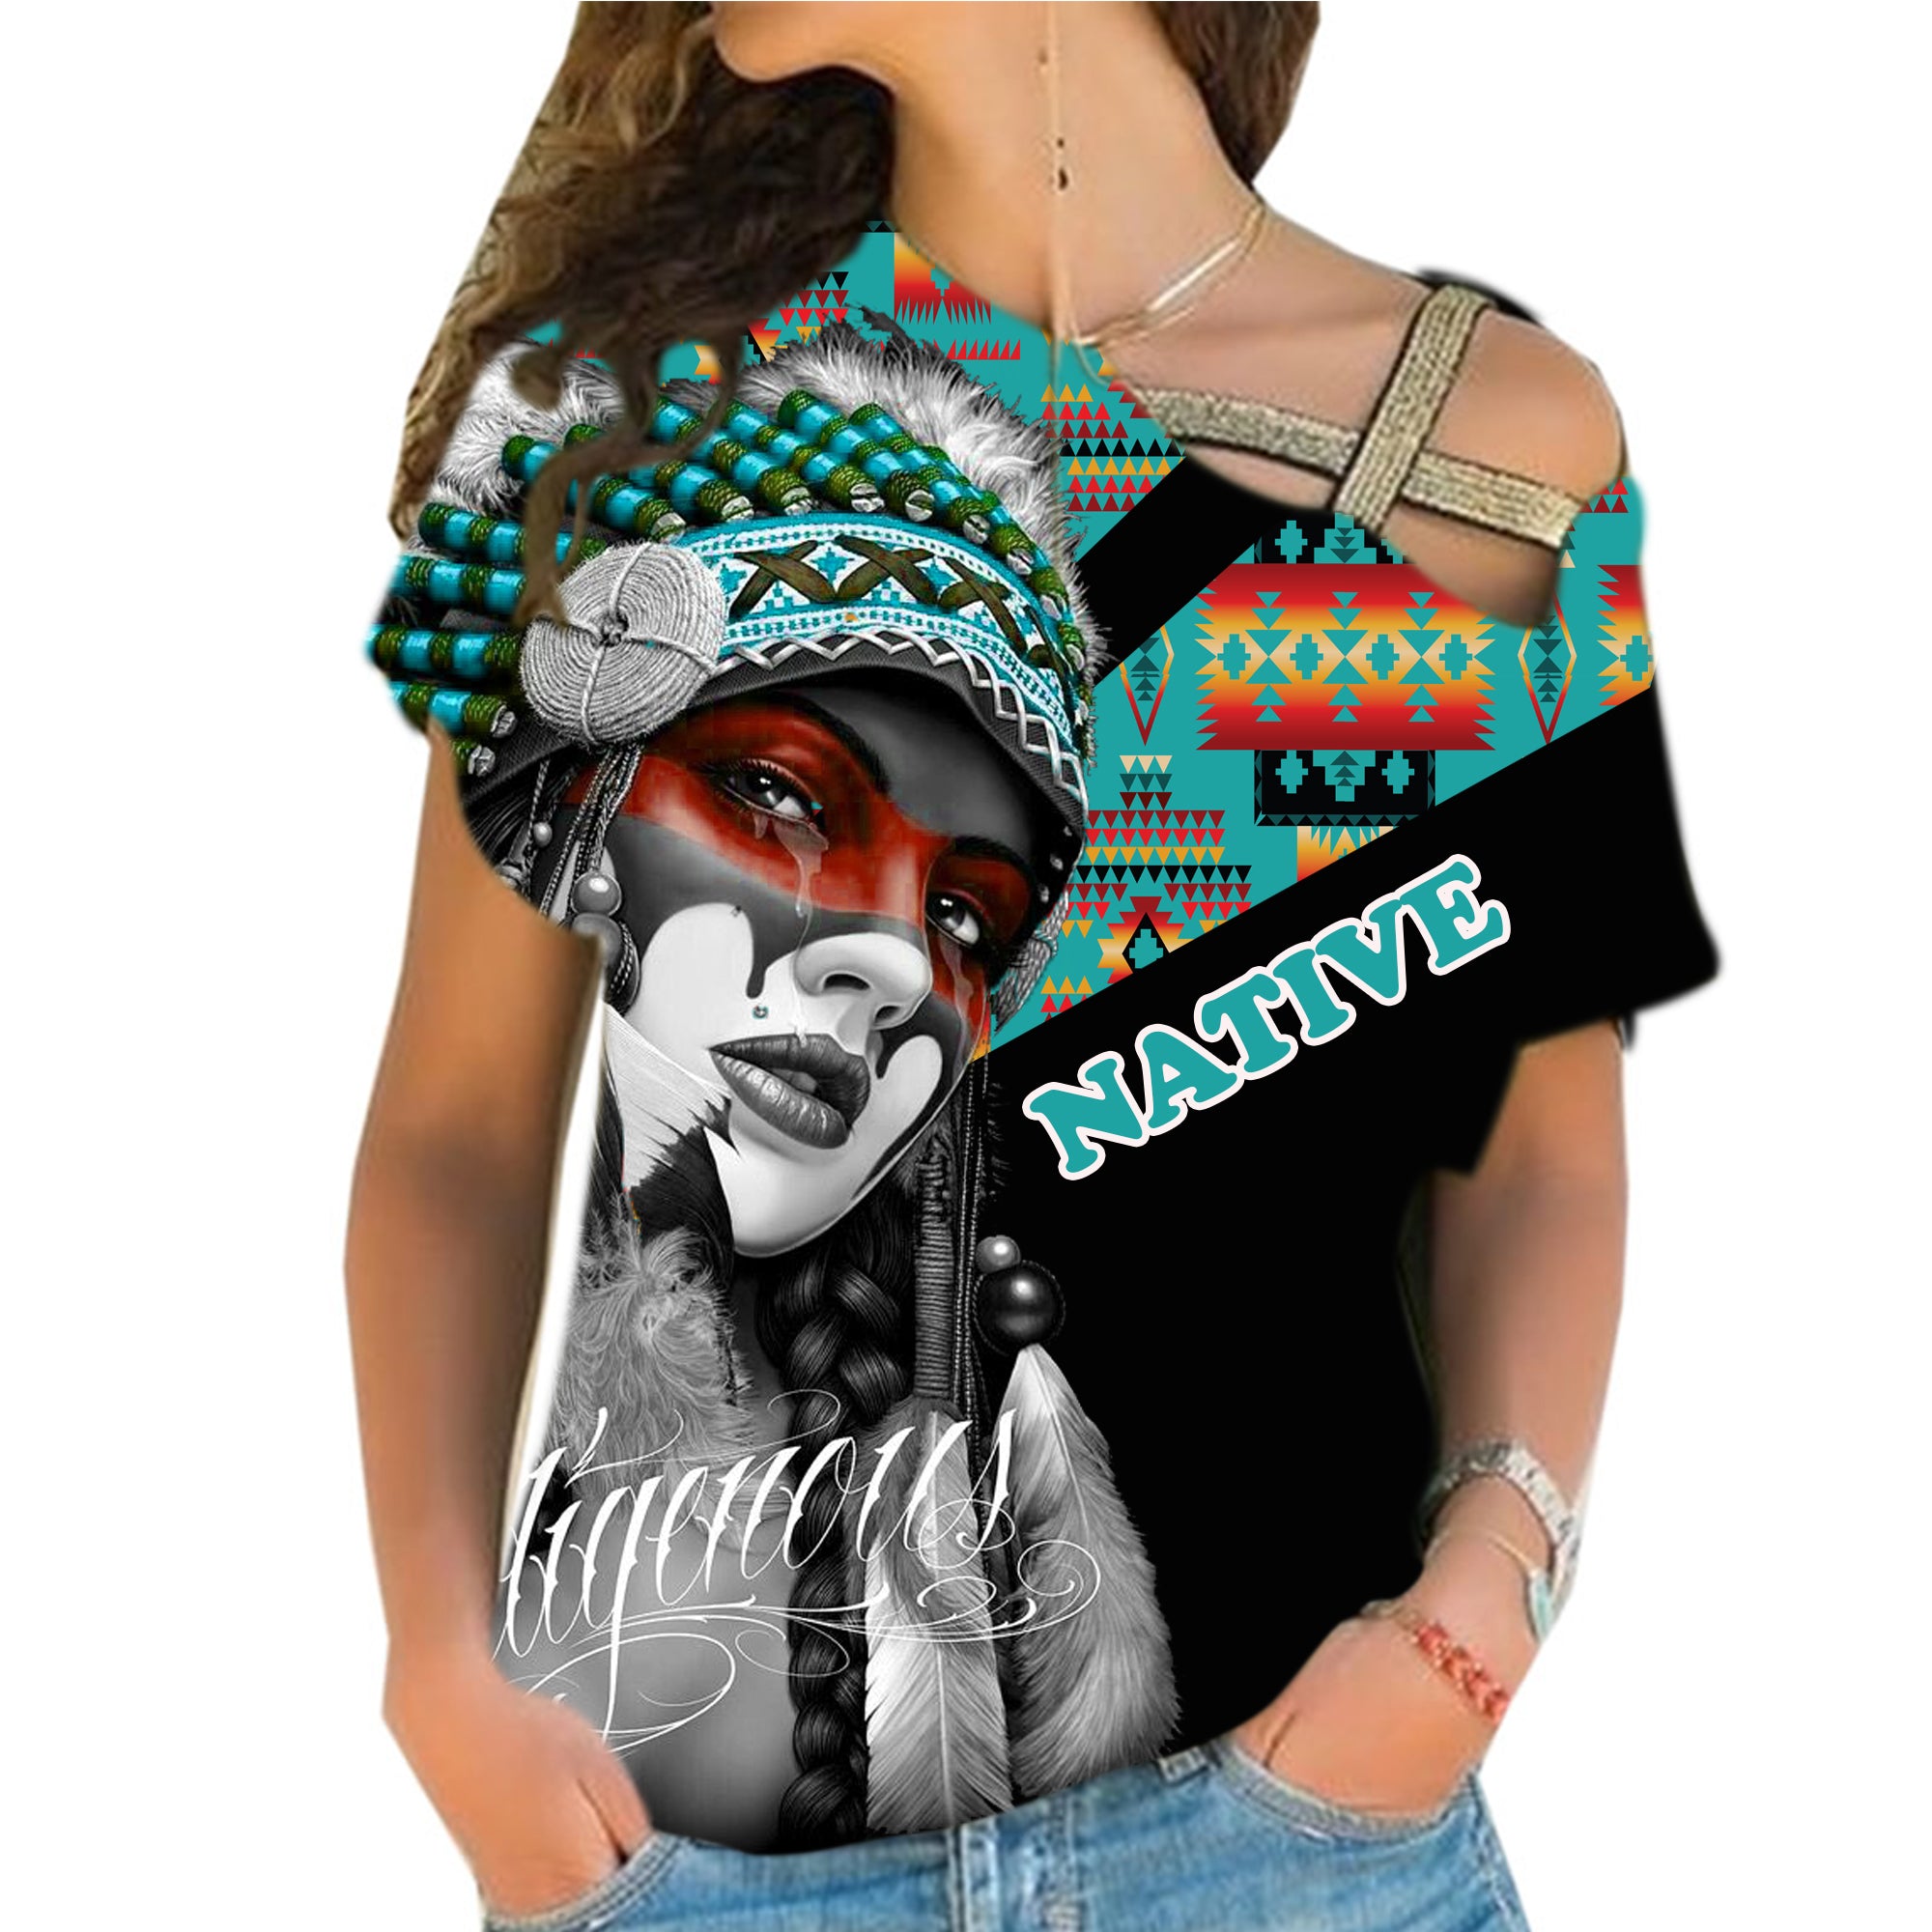 Powwow StoreCRS0001237 Native American Cross Shoulder Shirt